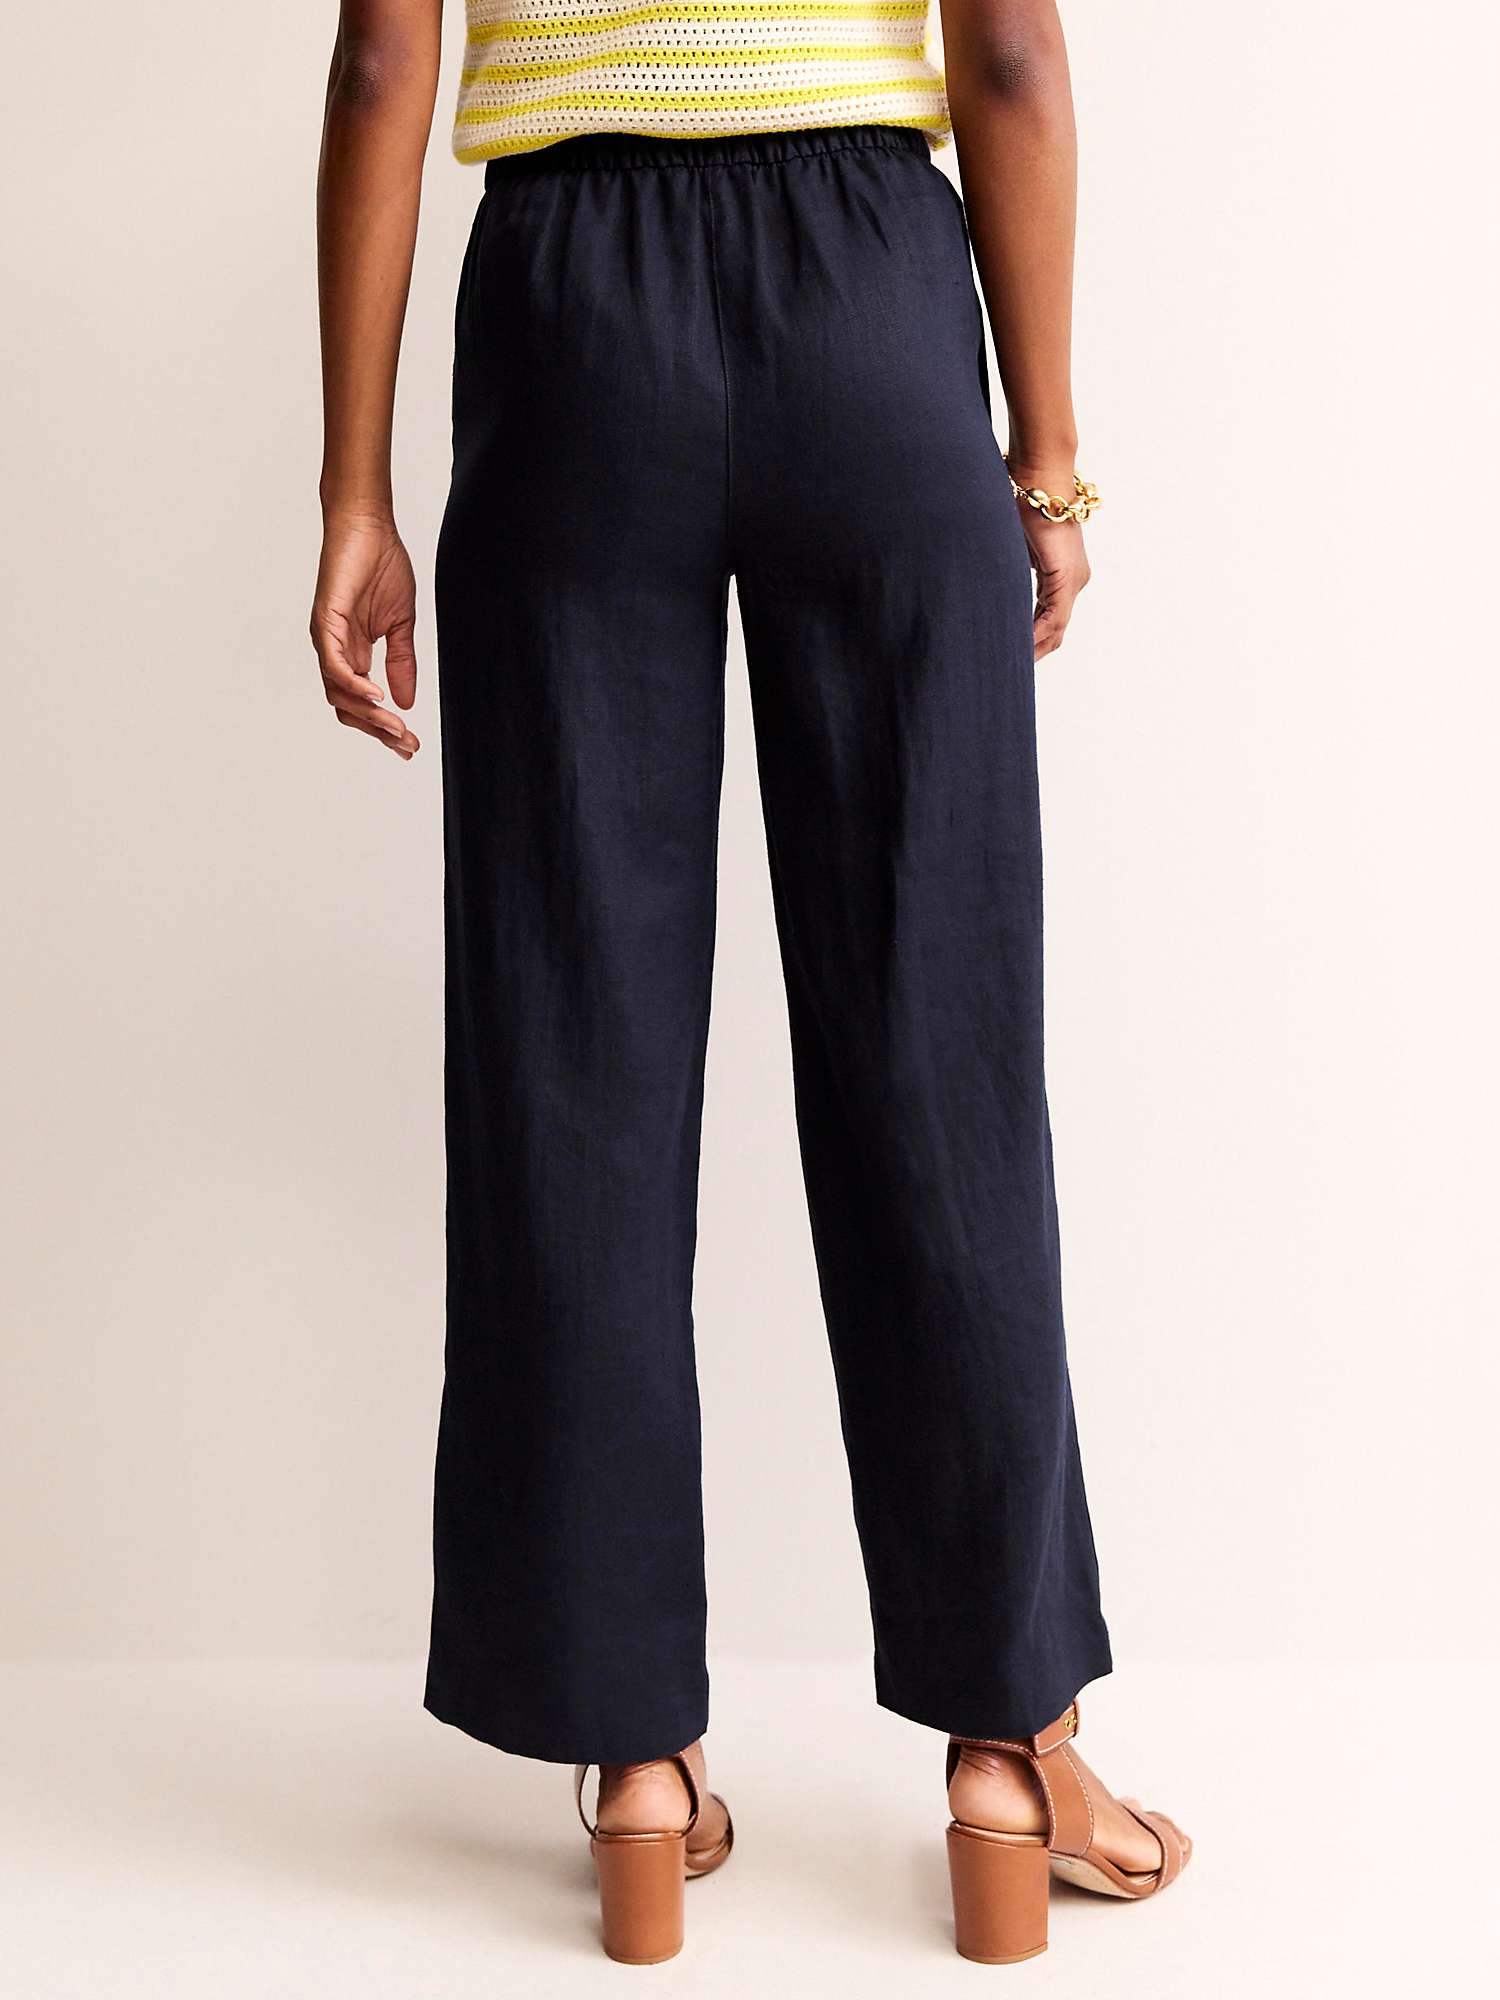 Buy Boden Hampstead Linen Trousers, Navy Online at johnlewis.com